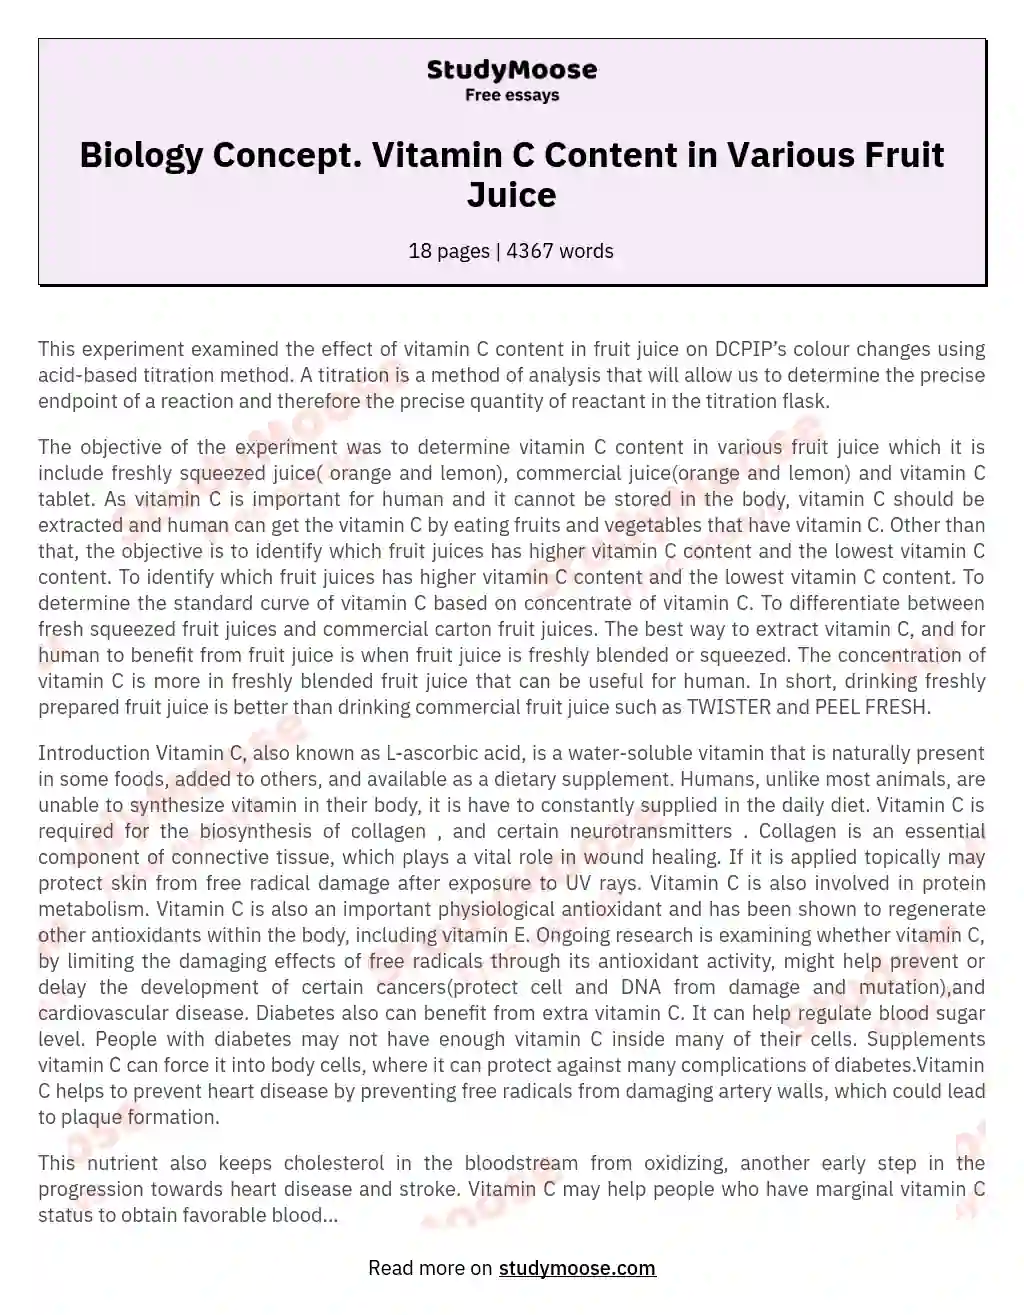 Biology Concept. Vitamin C Content in Various Fruit Juice essay